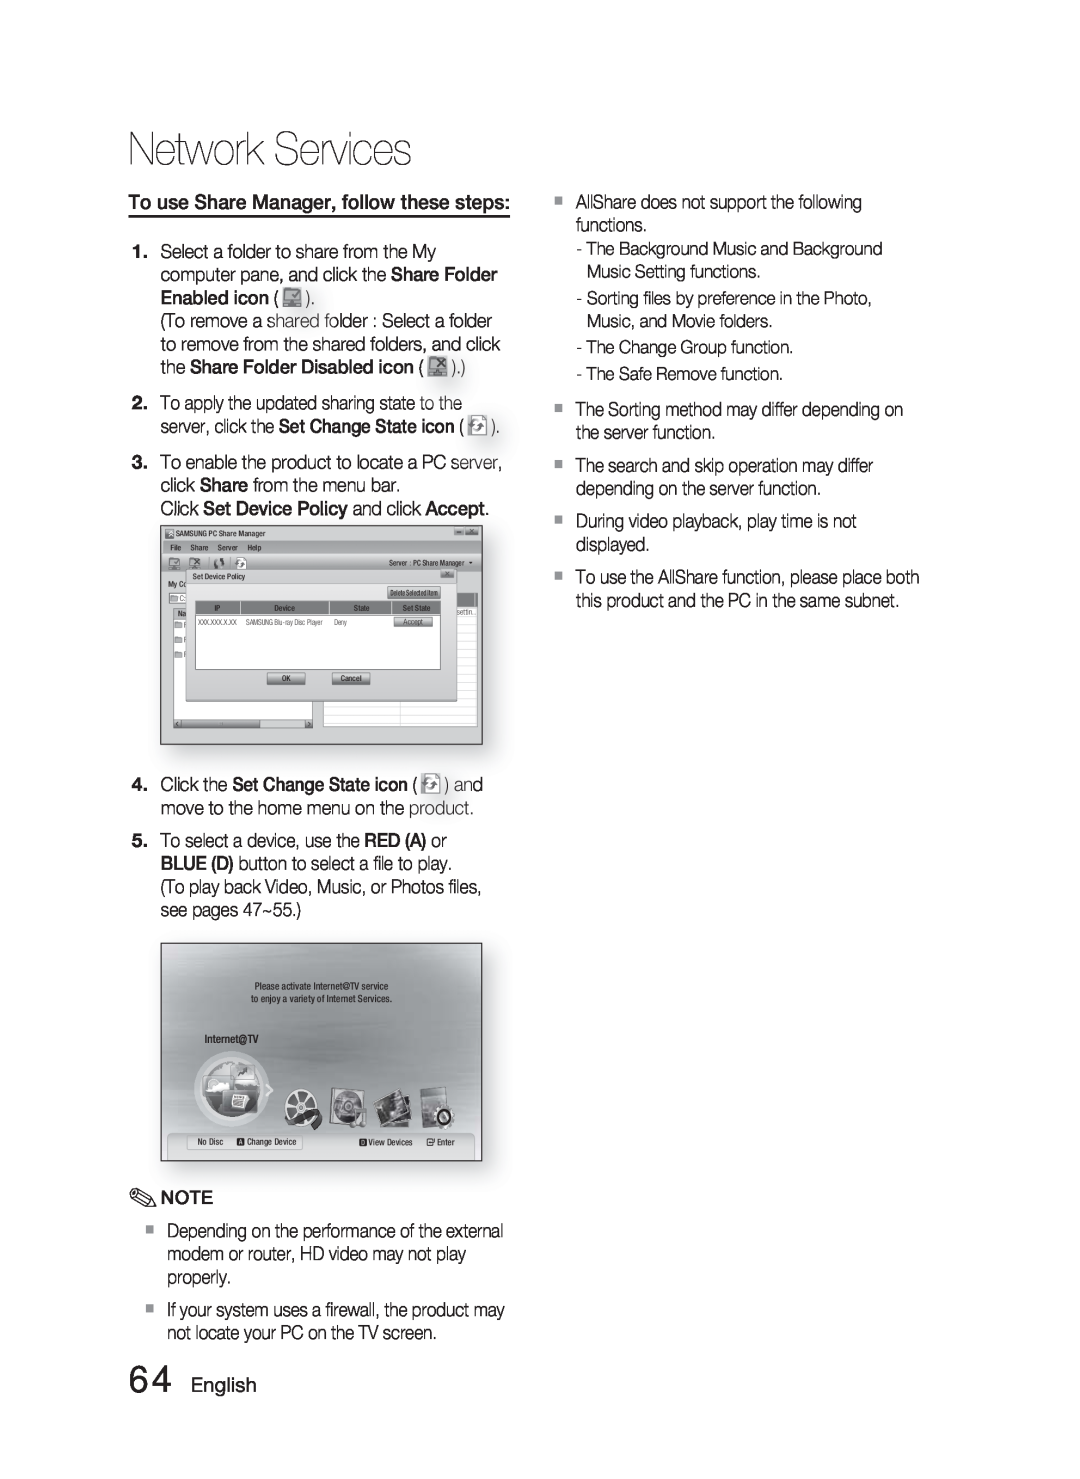 Samsung AH68-02279R user manual English, Network Services 